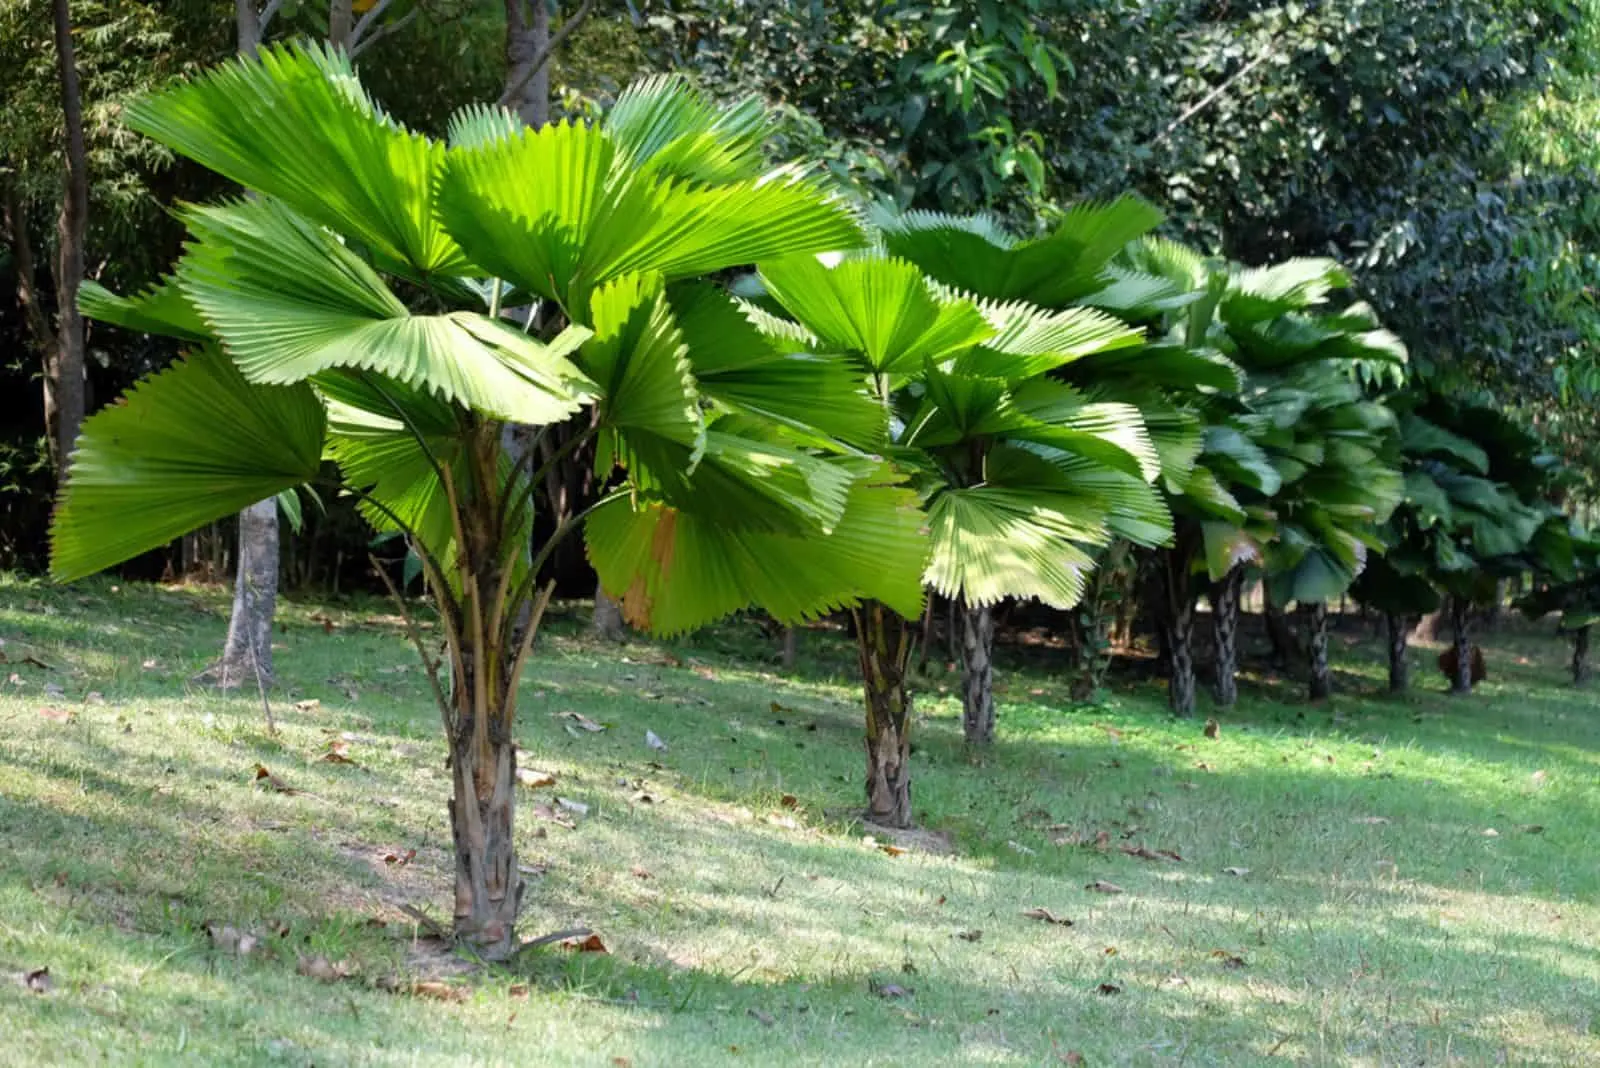 Licuala grandis is a single stem palm